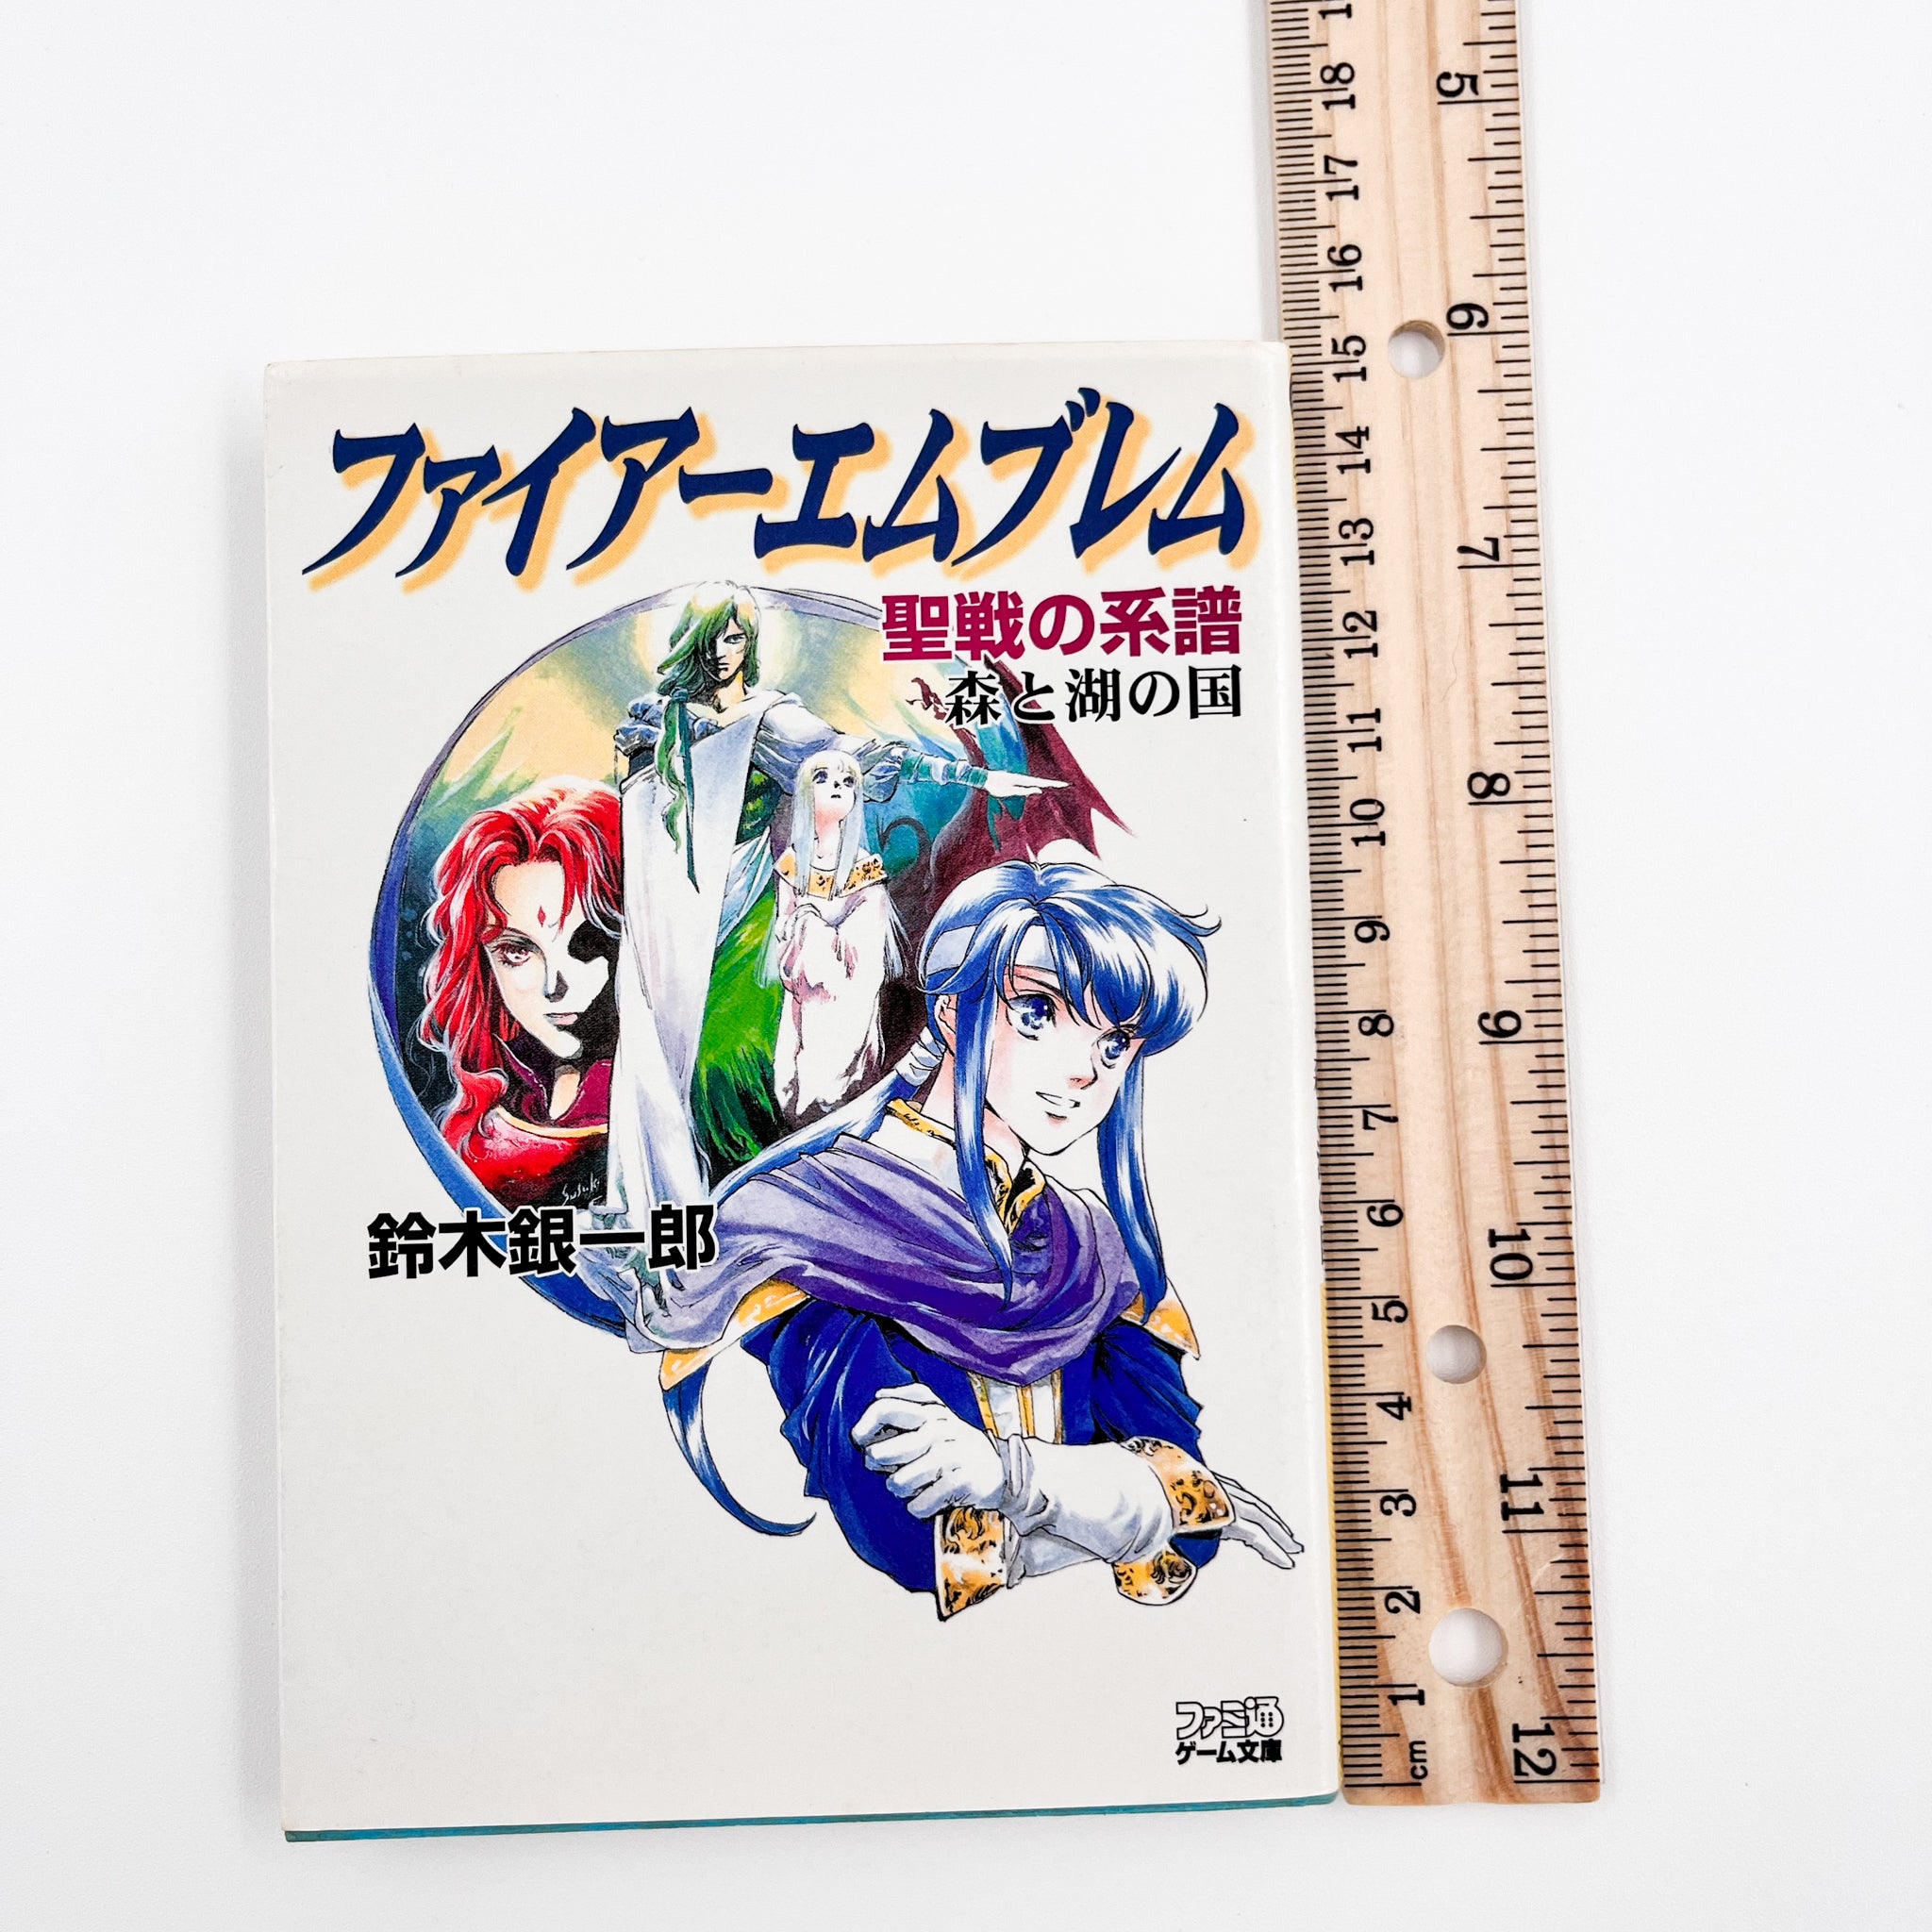 Fire Emblem: Genealogy of the Holy War - Mori to Mizuumi no Kuni light novel height 15cm